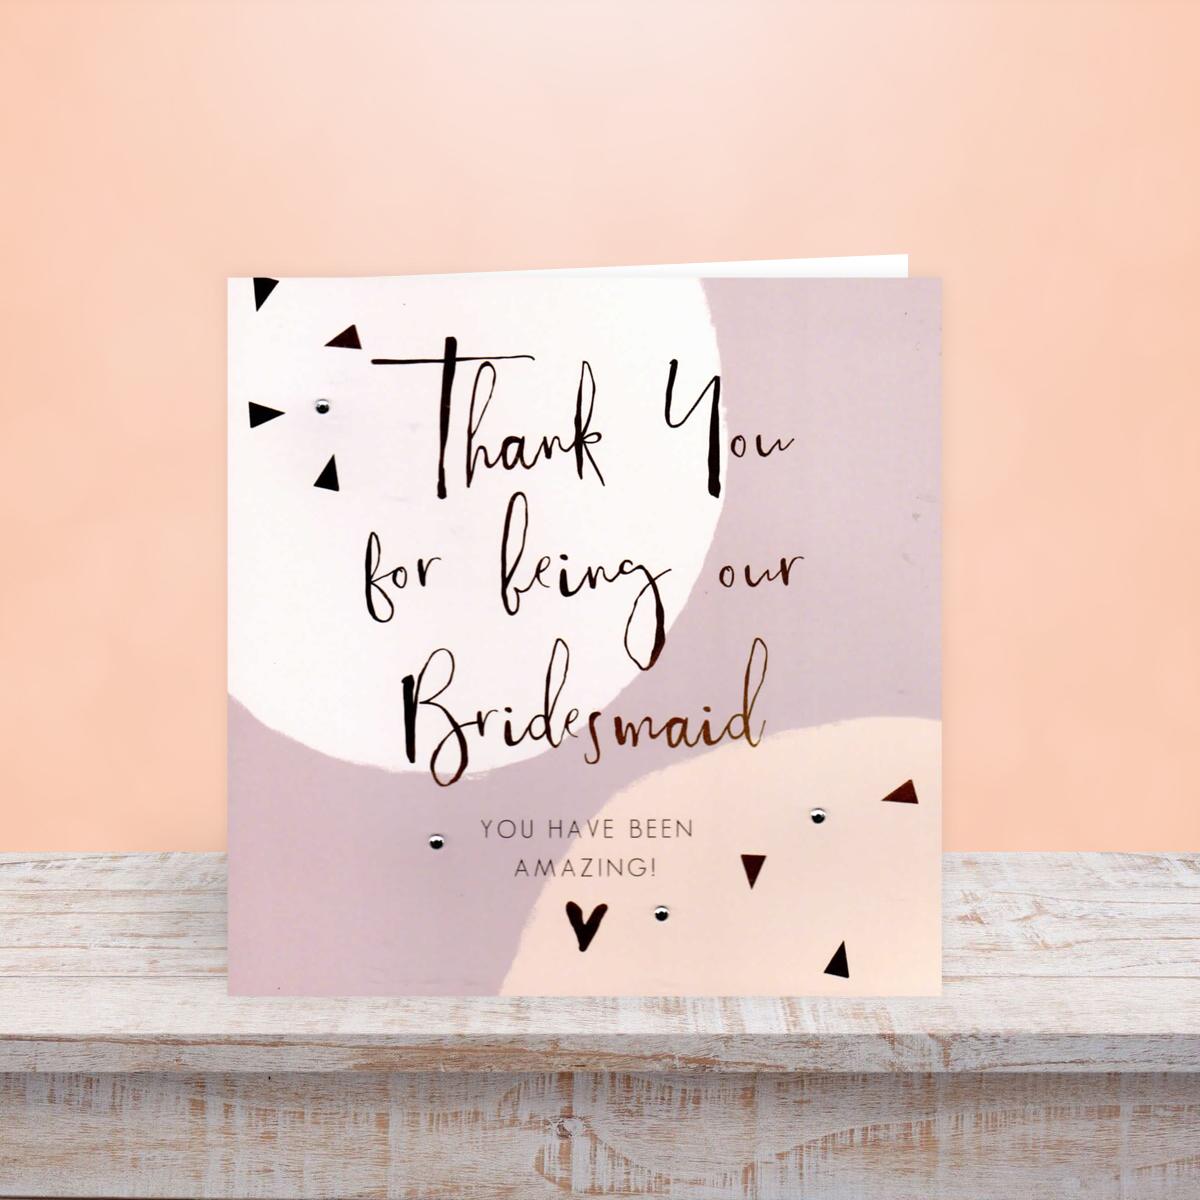 Bridesmaid Wedding Day Greeting Card On The Shelf